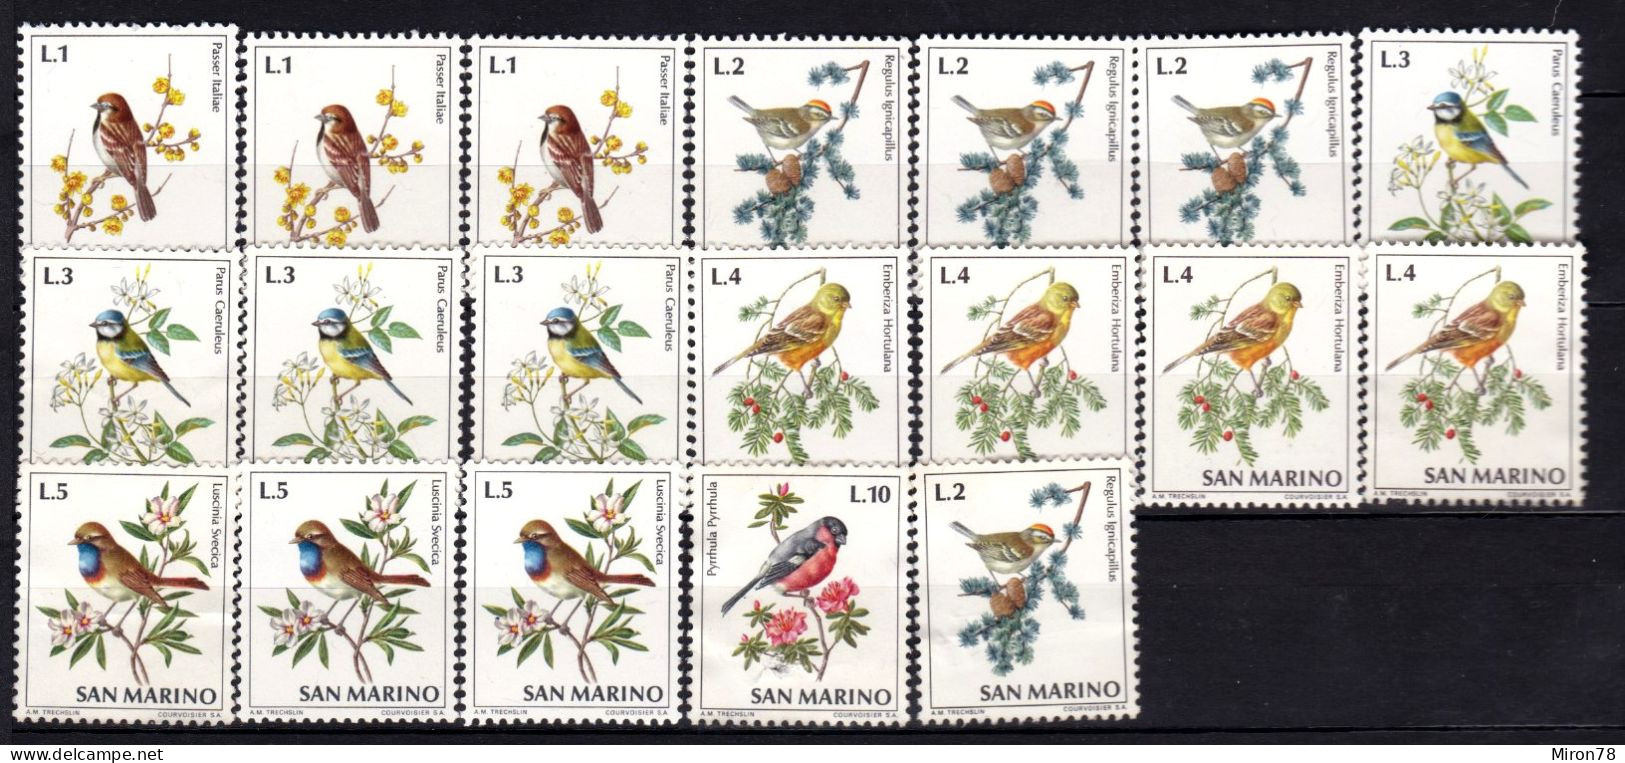 Stamps SAN MARINO MNH Lot37 - Unused Stamps